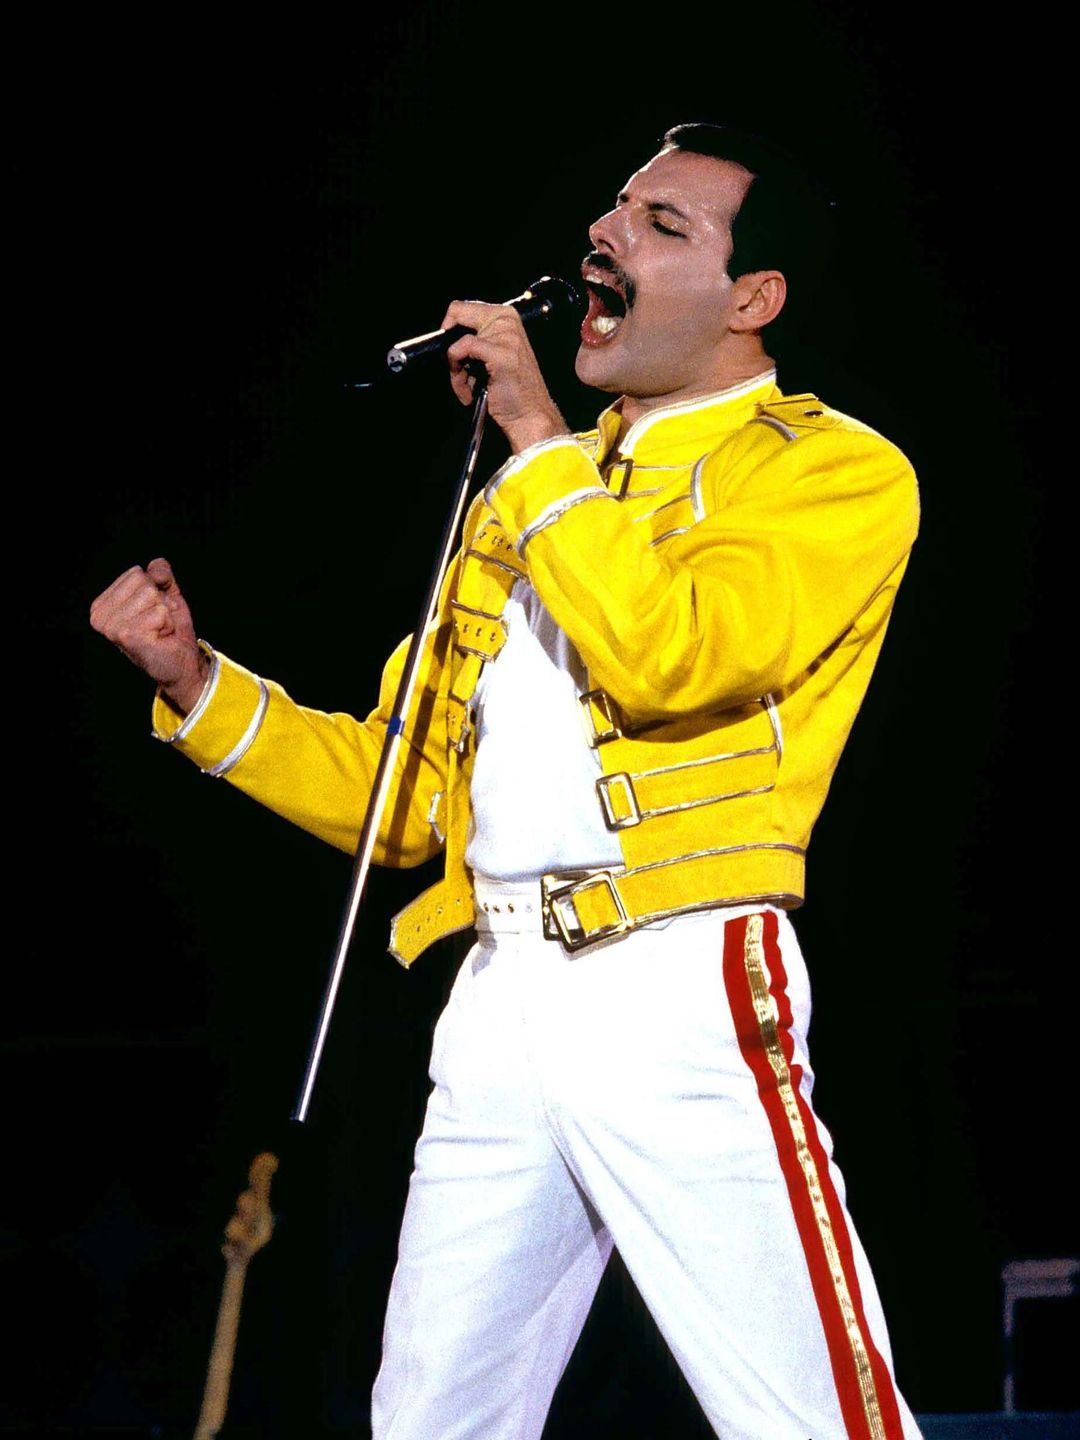 Freddie Mercury main achievements